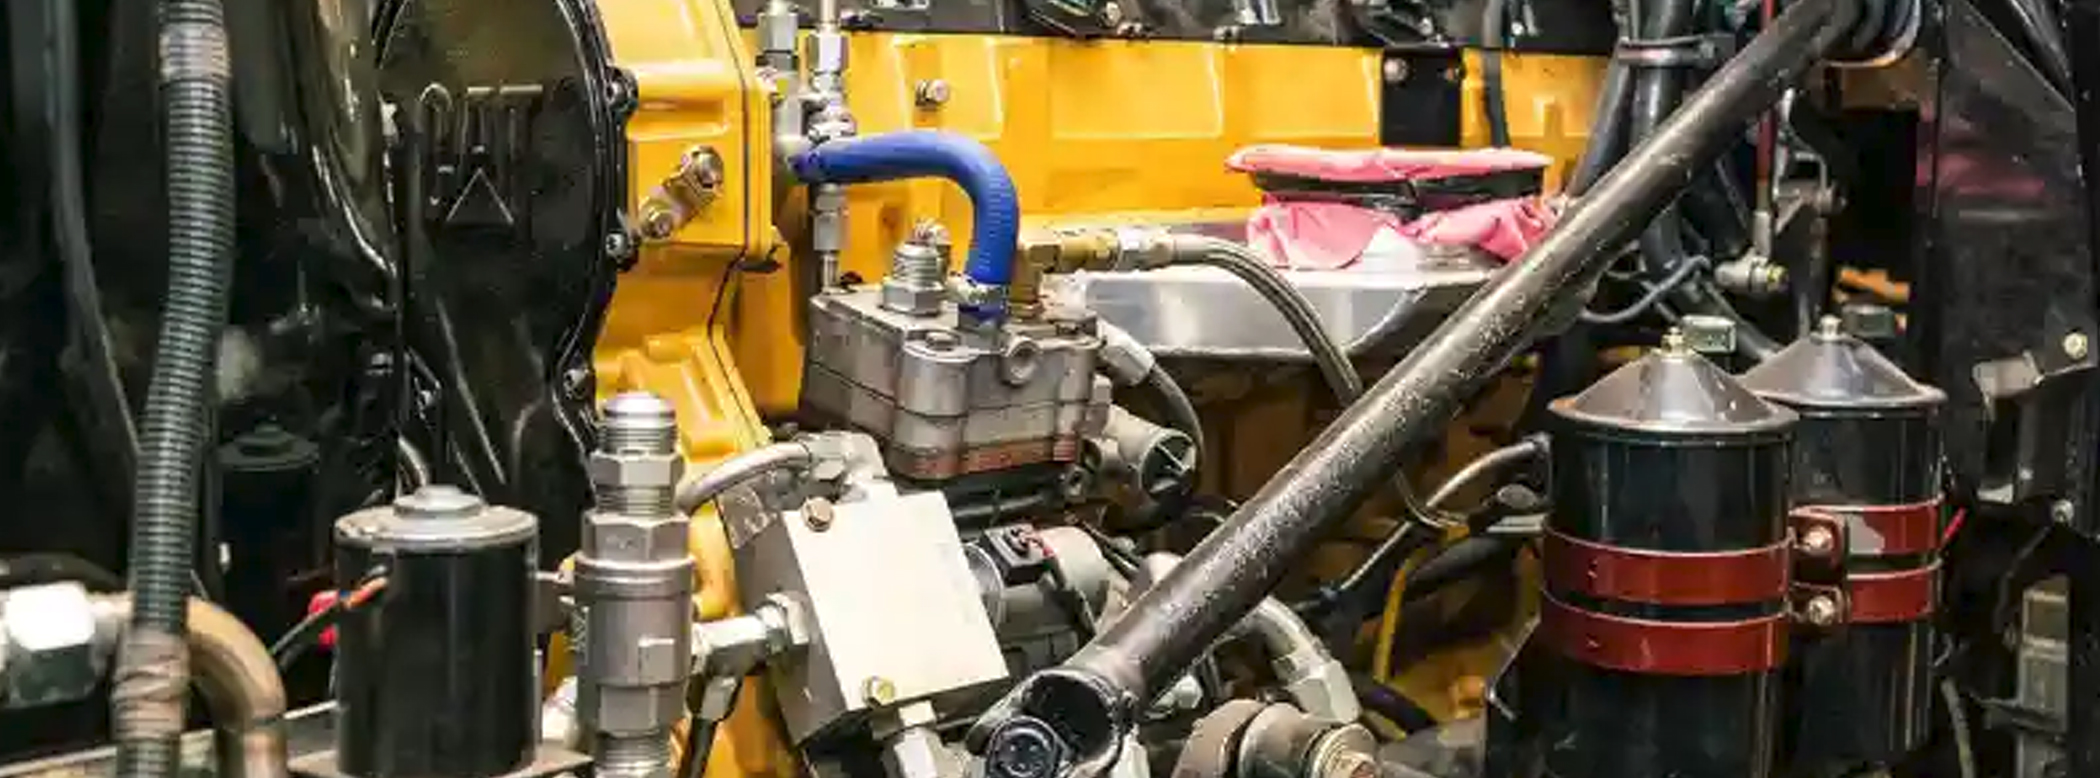 Common Causes Of Engine Overheating In Heavy Duty Trucks | Schroeder Truck Repair